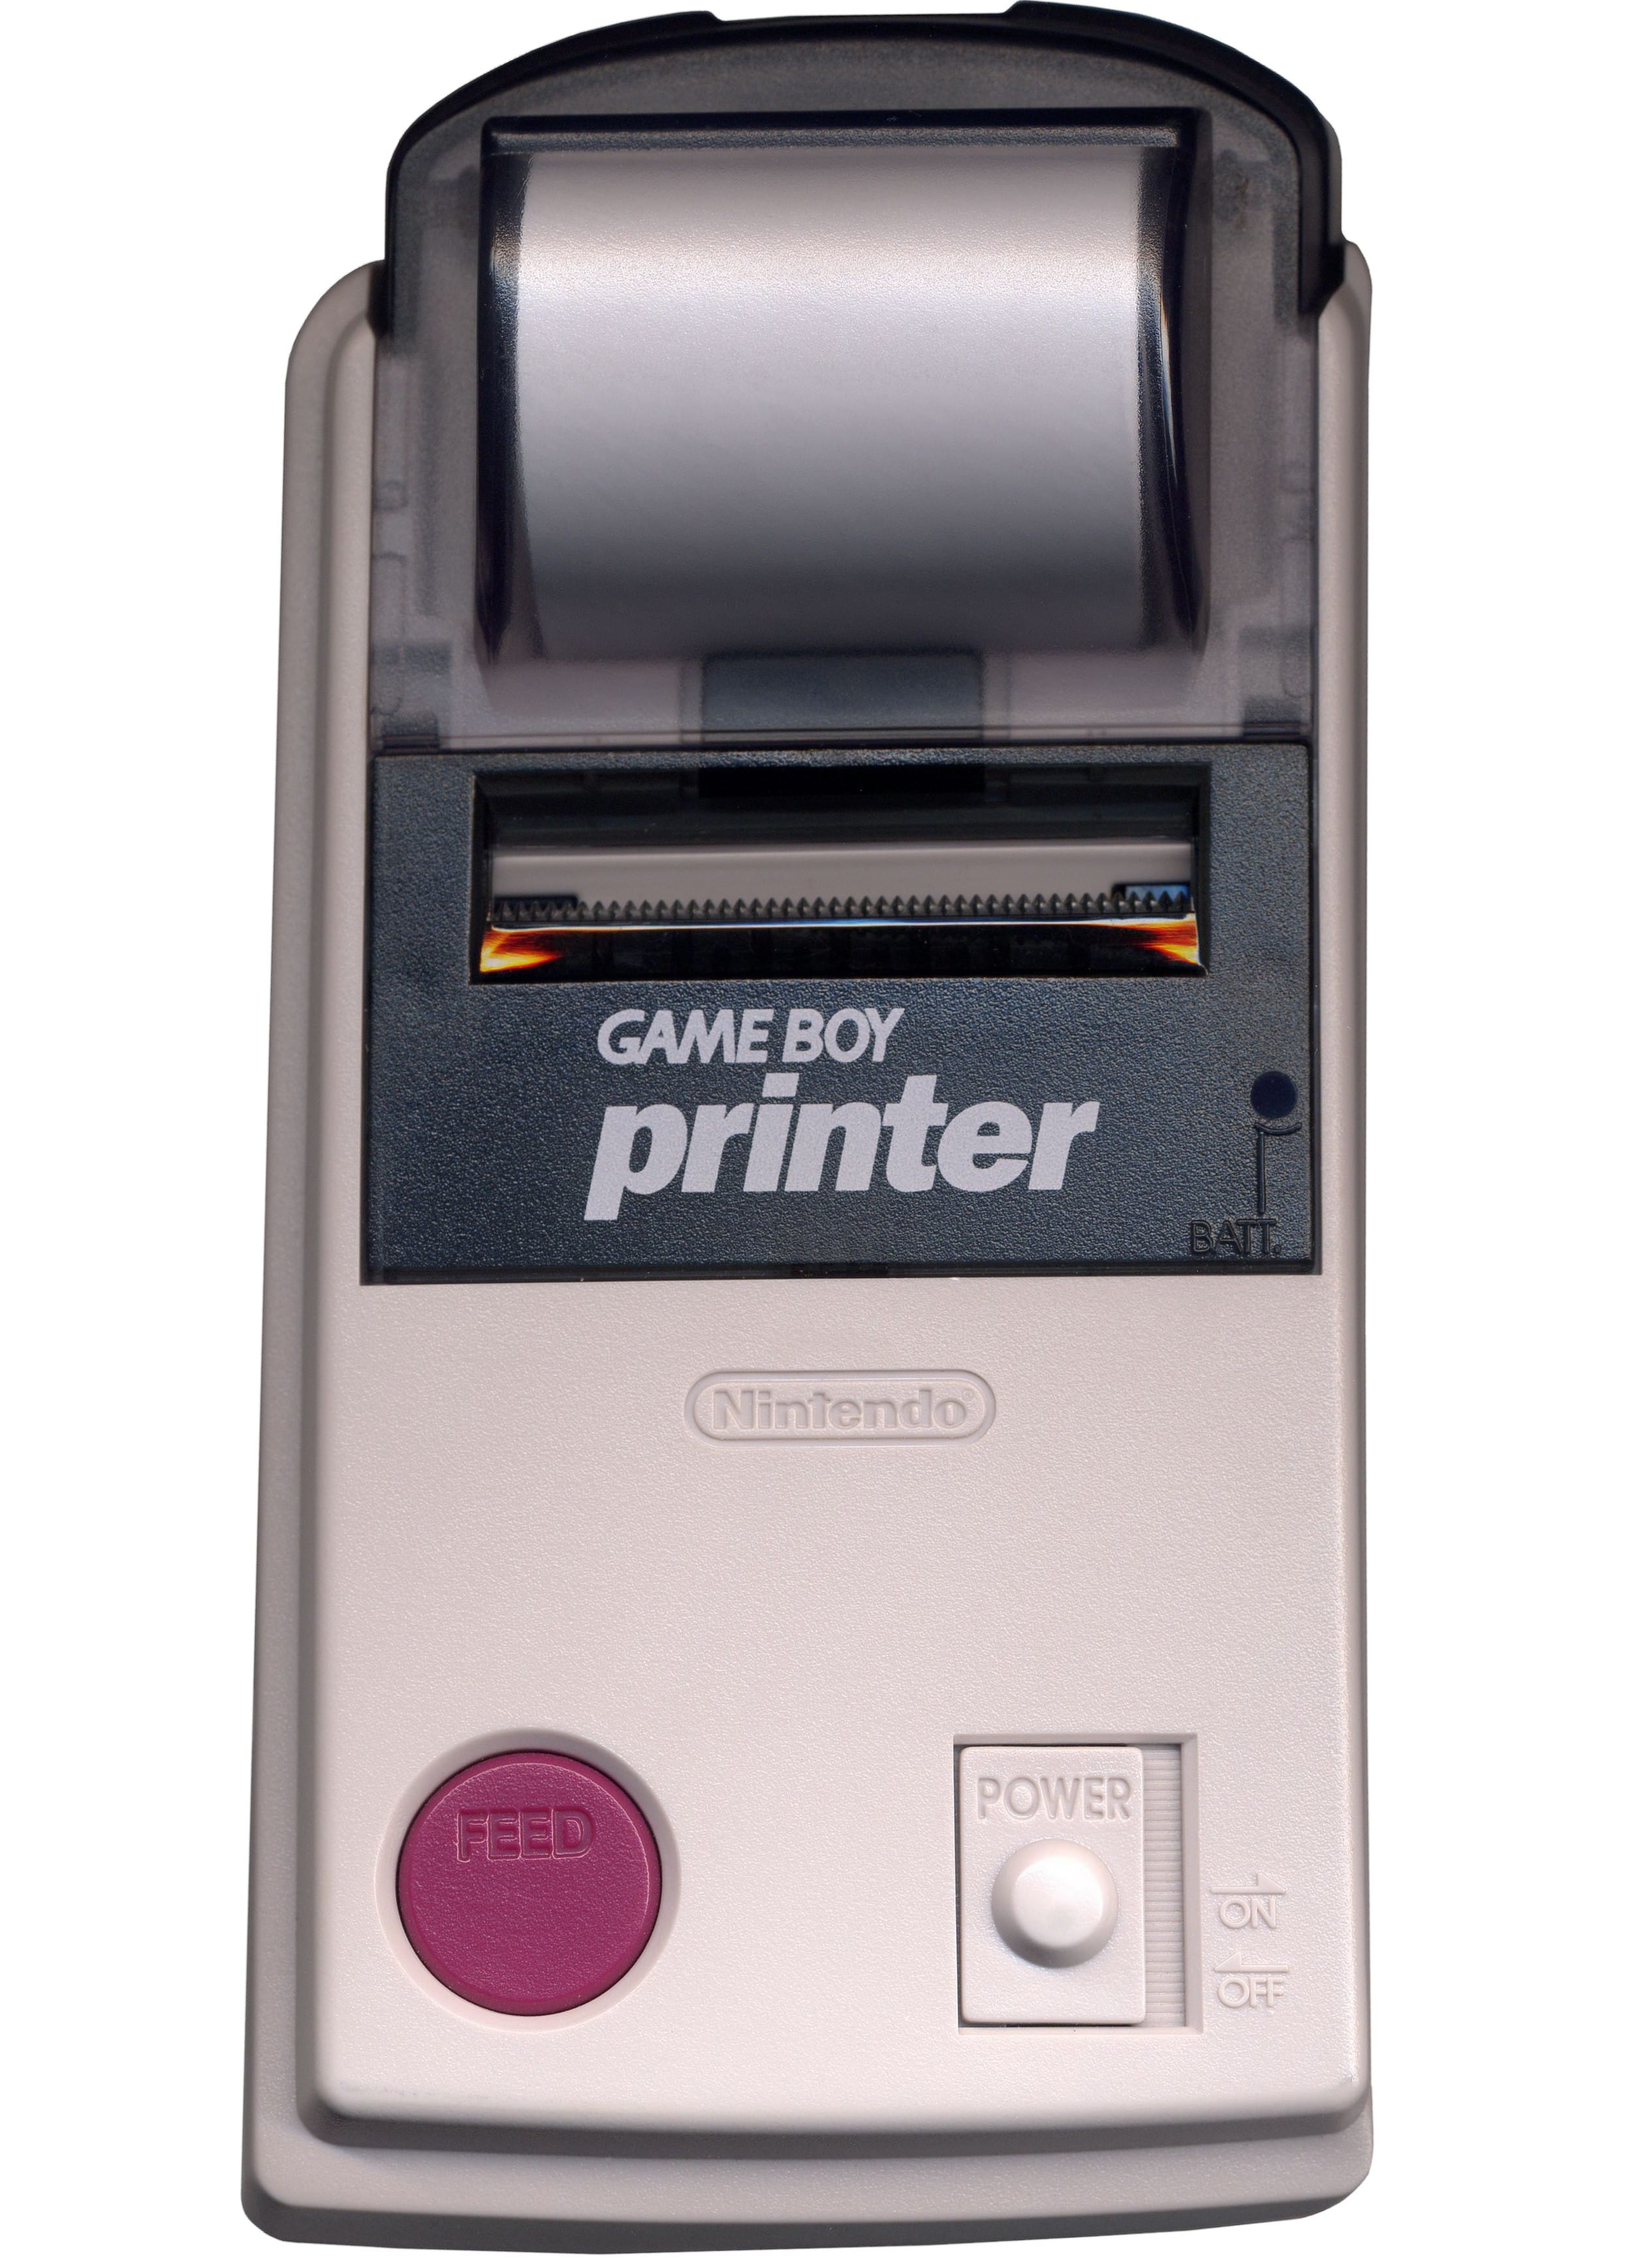 The Game Boy Printer.